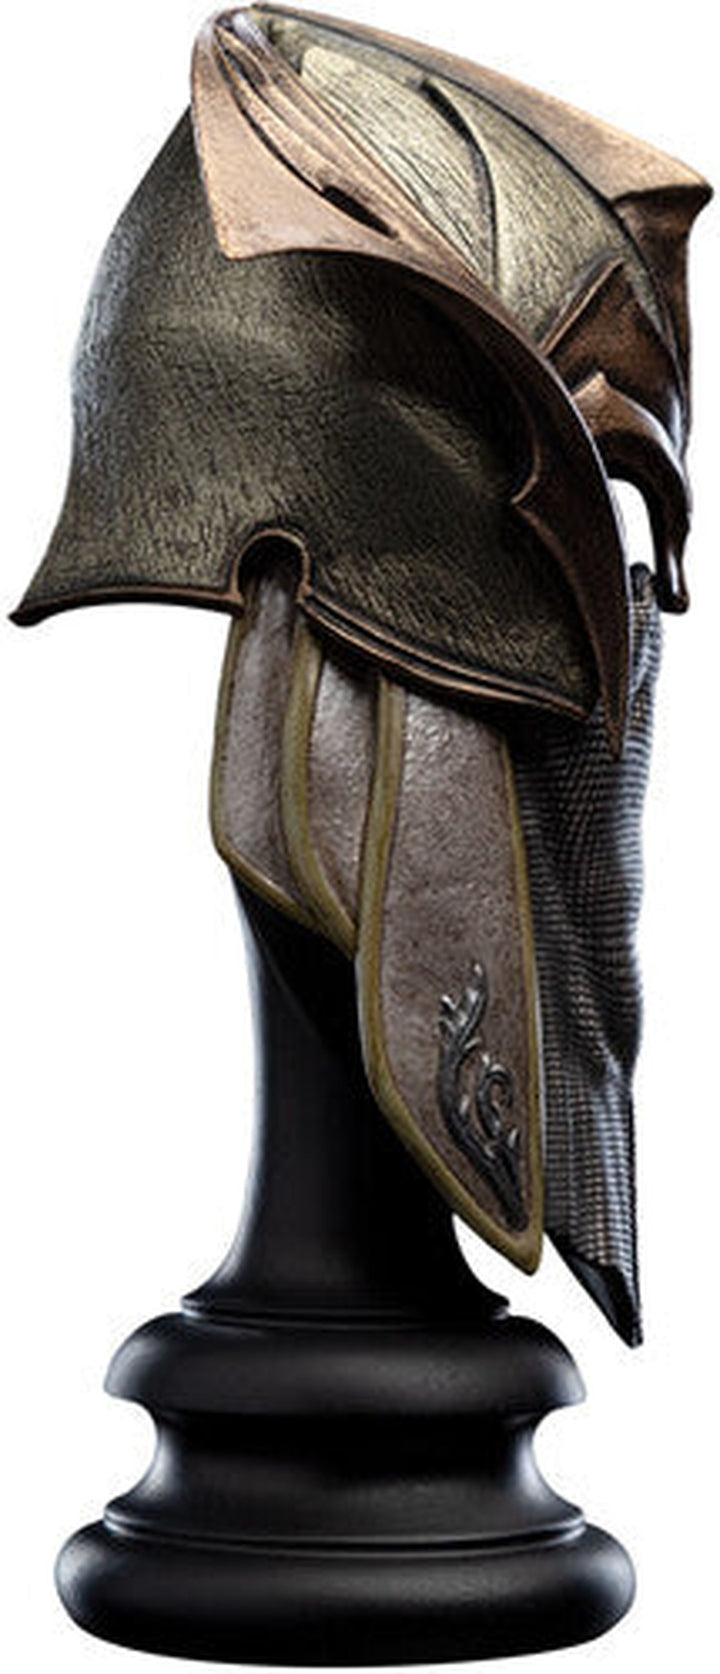 WETA Workshop Mini Prop Replica -The Hobbit Trilogy - Mirkwood Palace Guard Helm 1:4 Scale Helmet